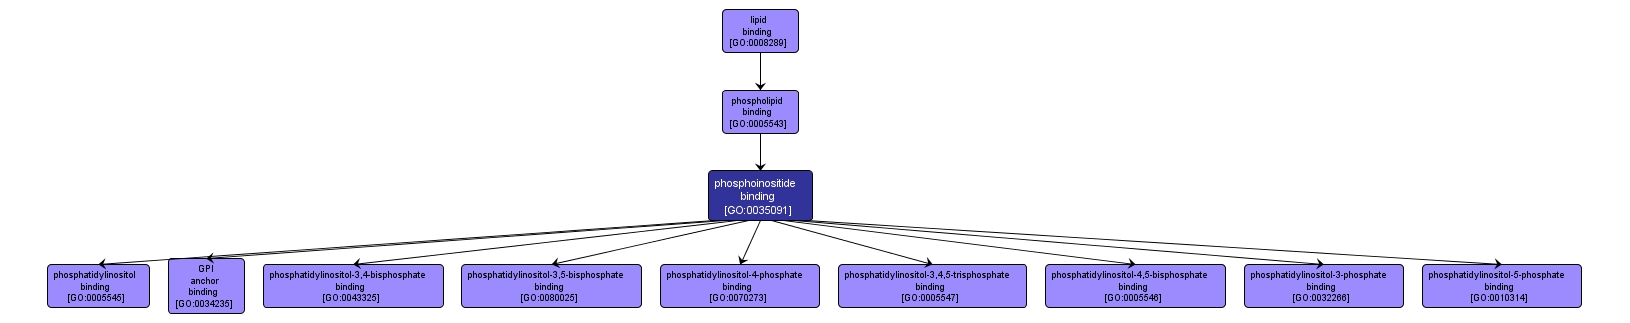 GO:0035091 - phosphoinositide binding (interactive image map)